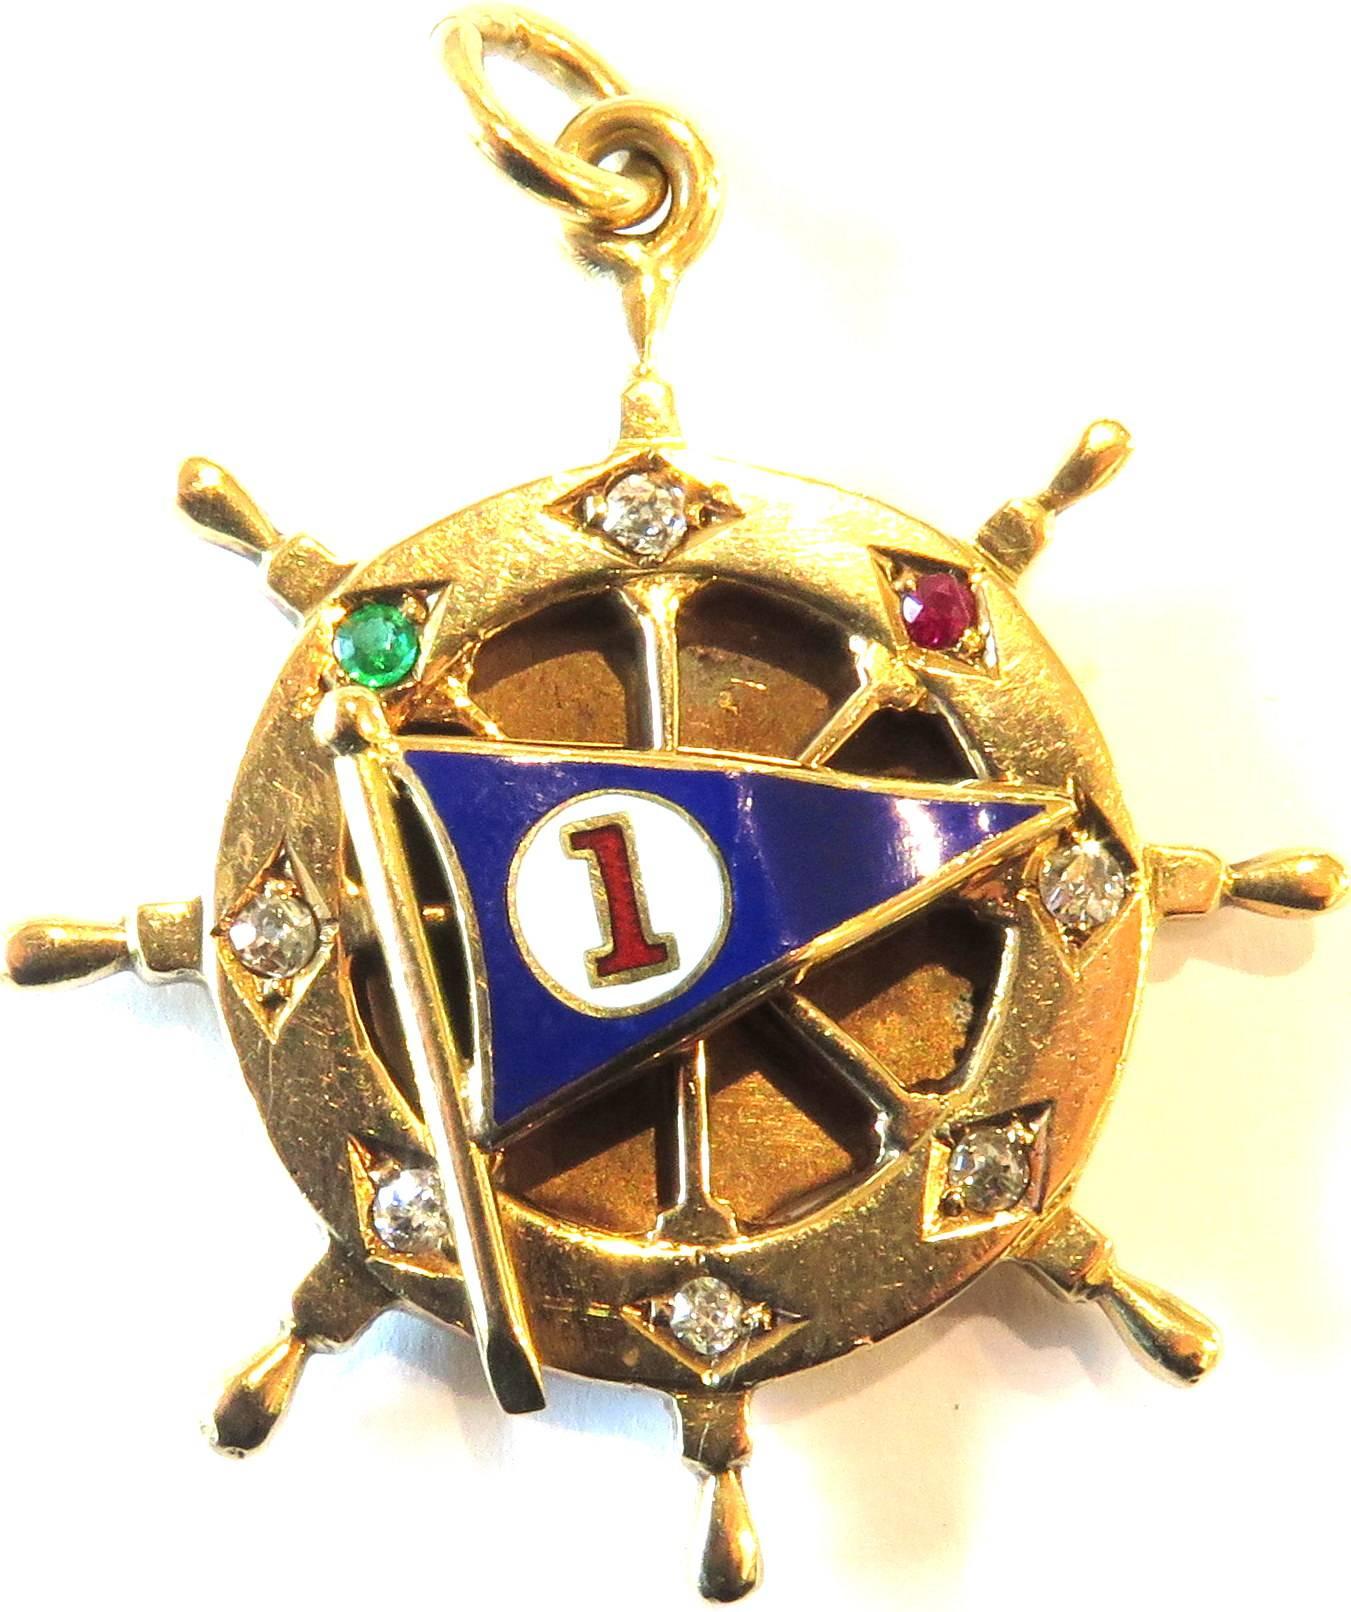 Nautical Presentation Enamel Gemstone Gold Pendant Charm Dated Jan 10 1919 4